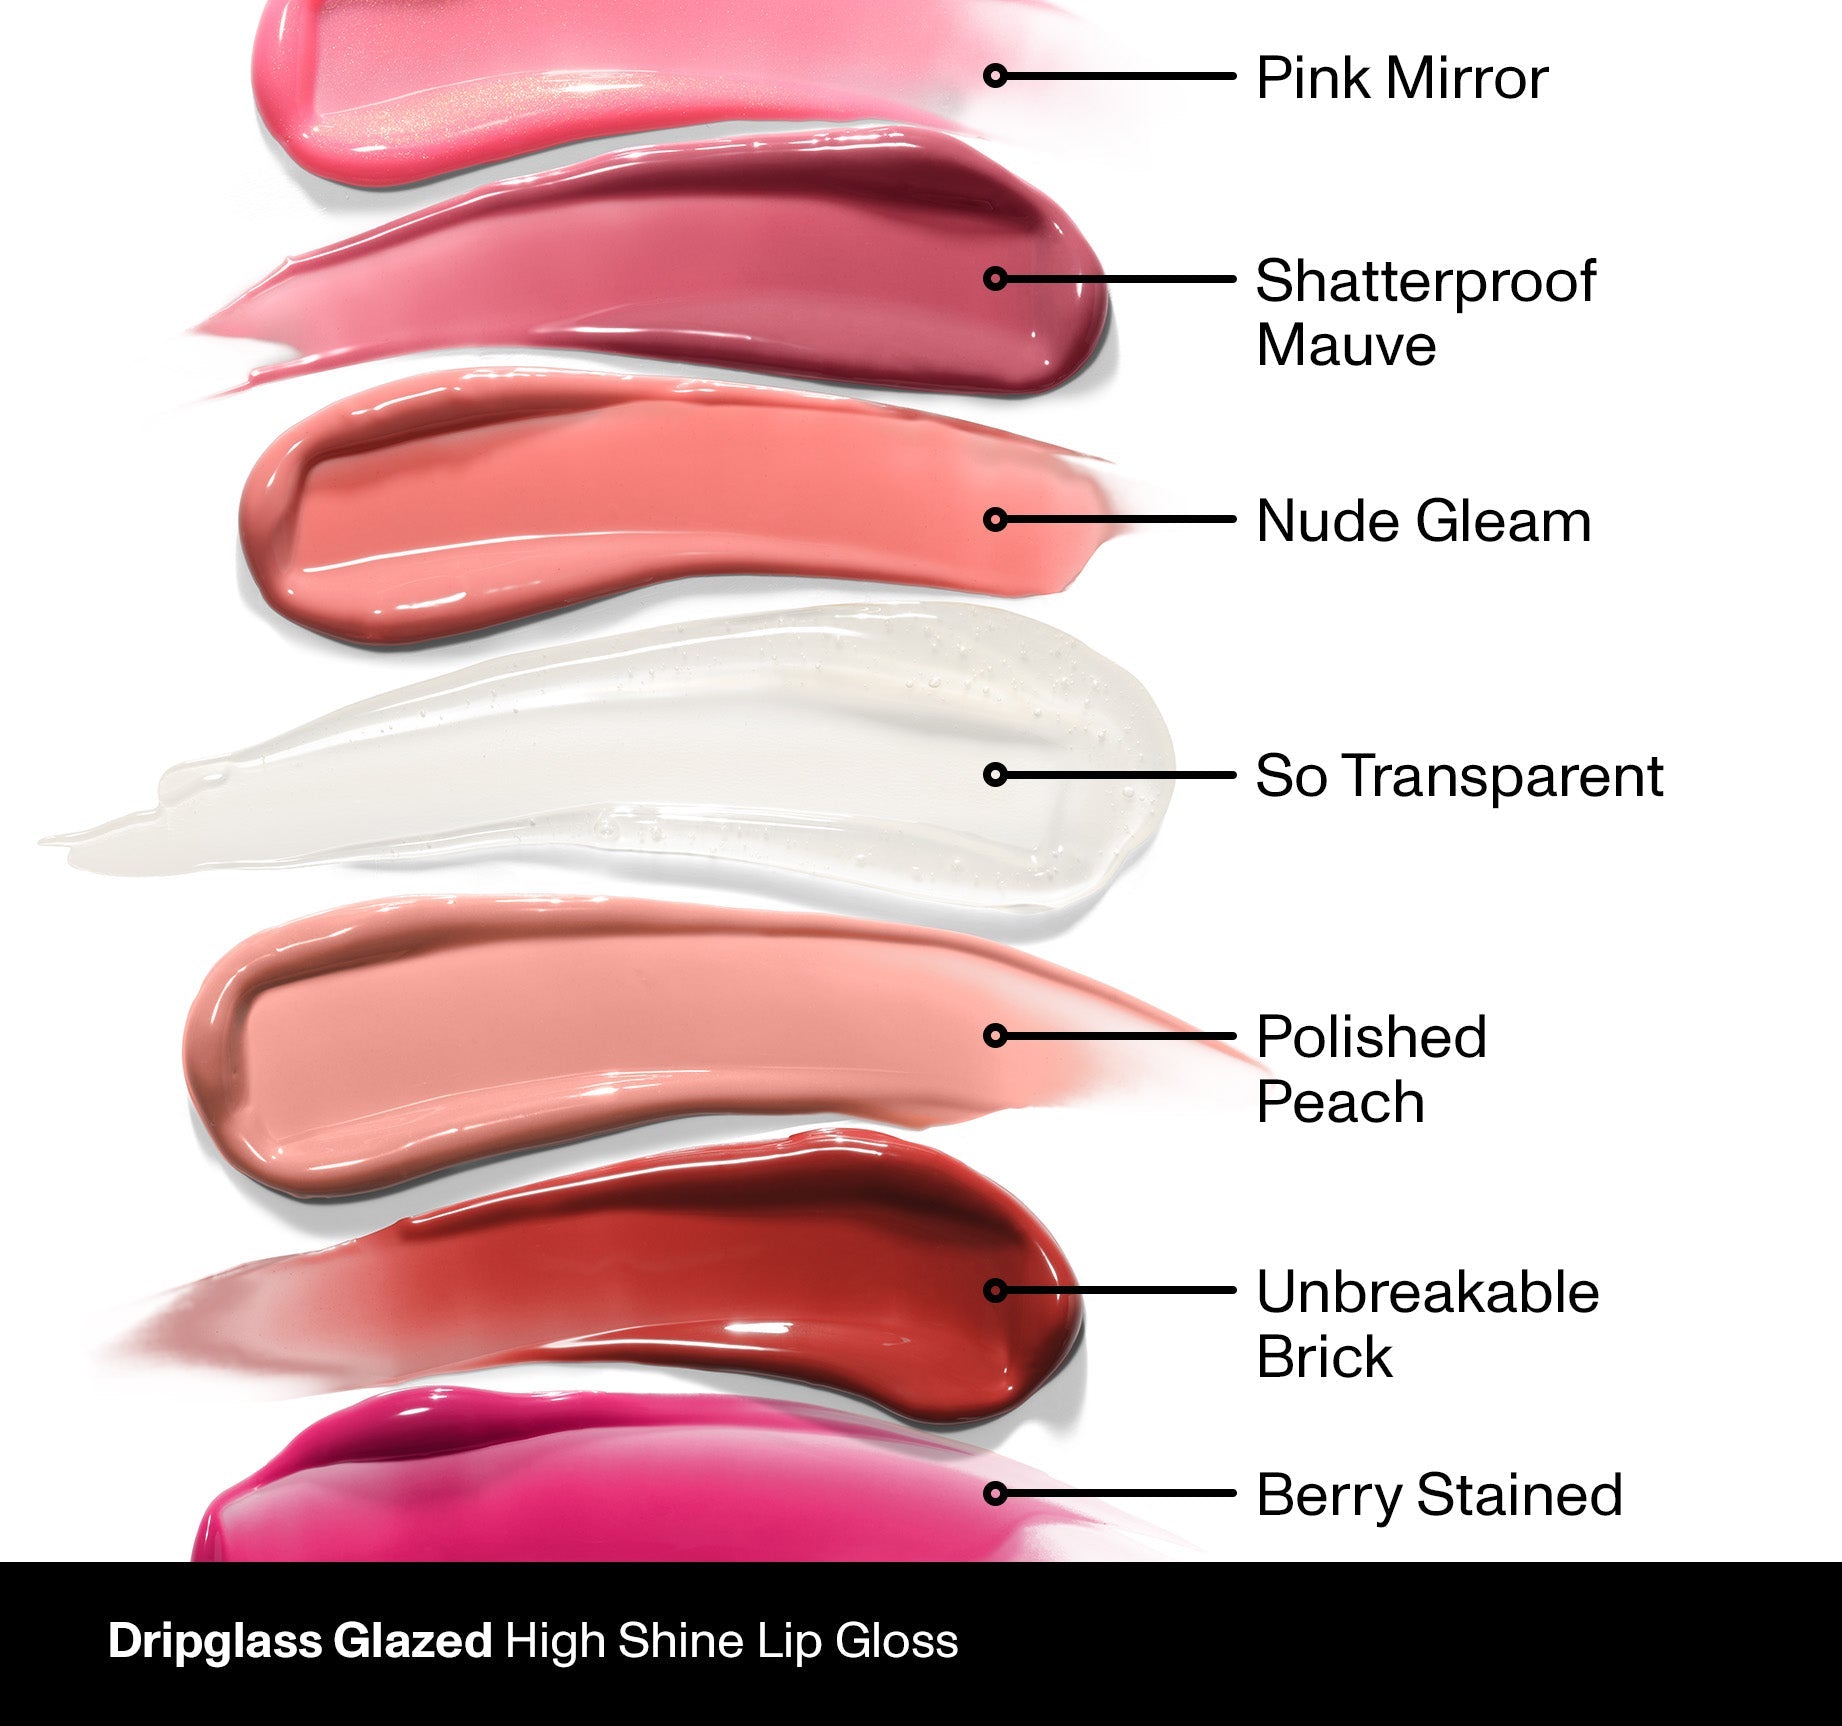 Dripglass Glazed High Shine Lip Gloss - Shatterproof Mauve - Image 4